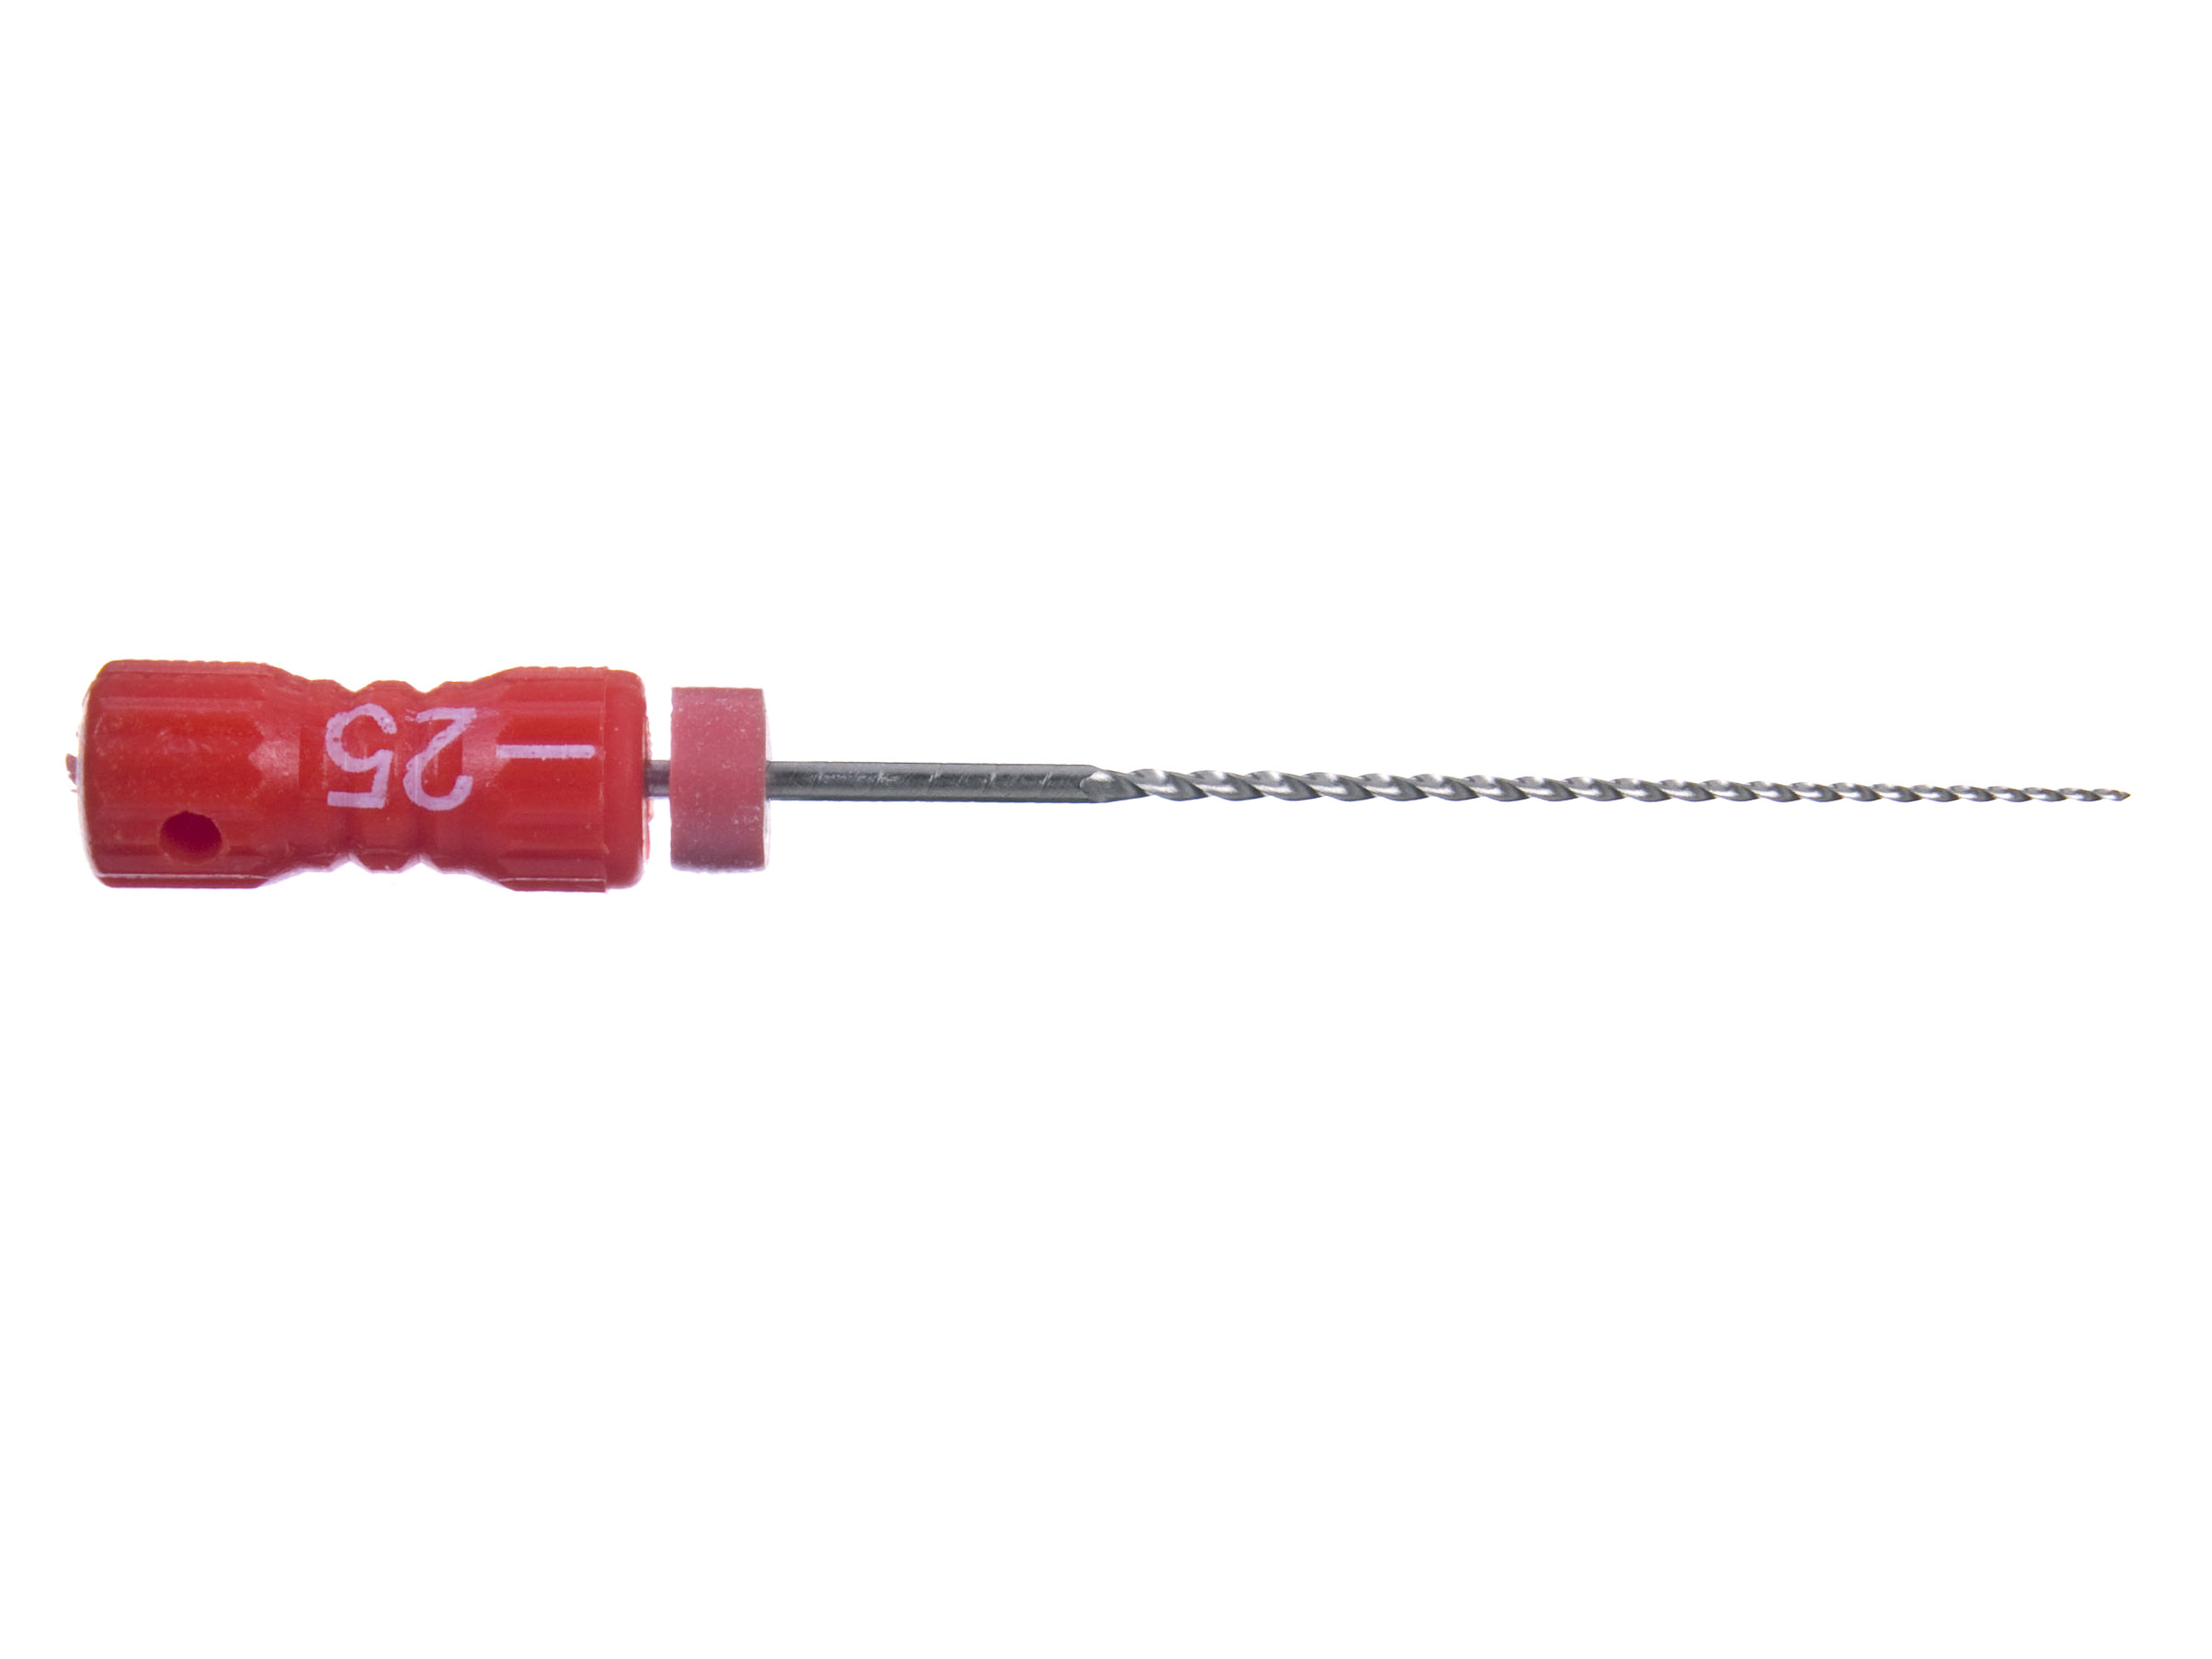 Helifile n25 L:25 mm Handle 09 ISO - инструменты эндодонтические